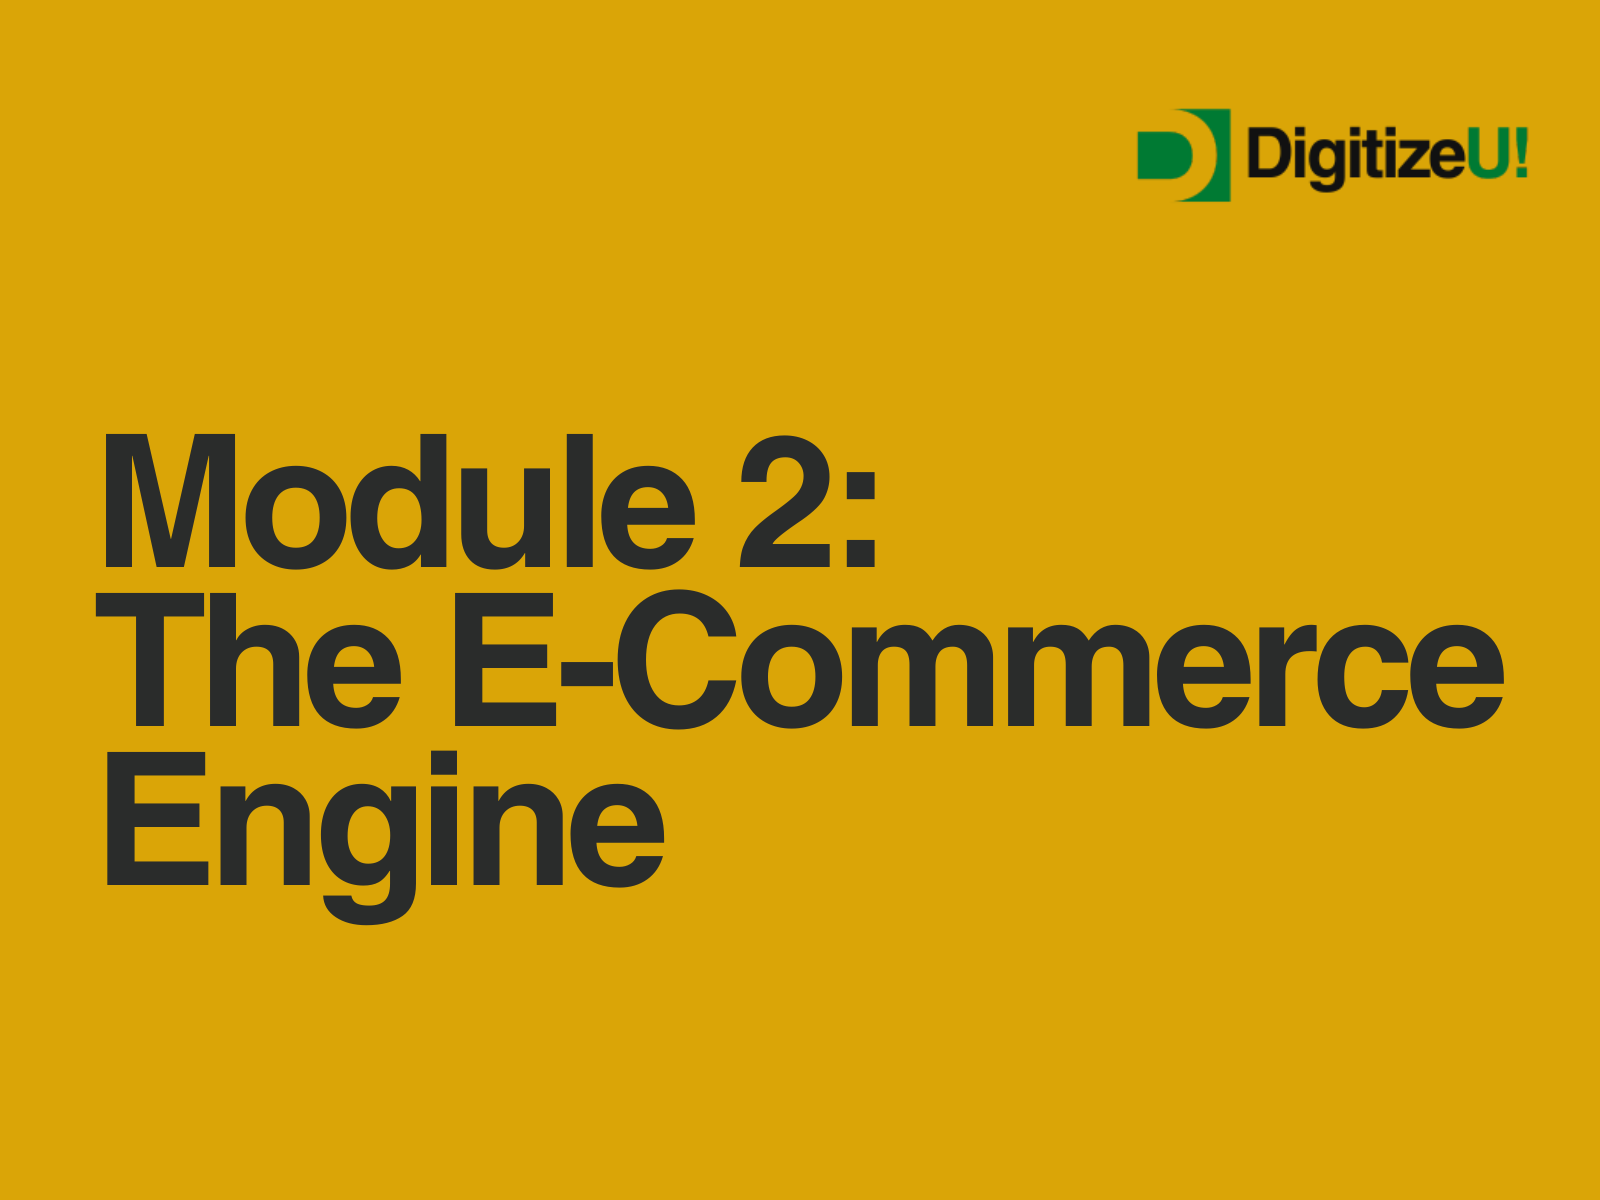 The E-Commerce Engine